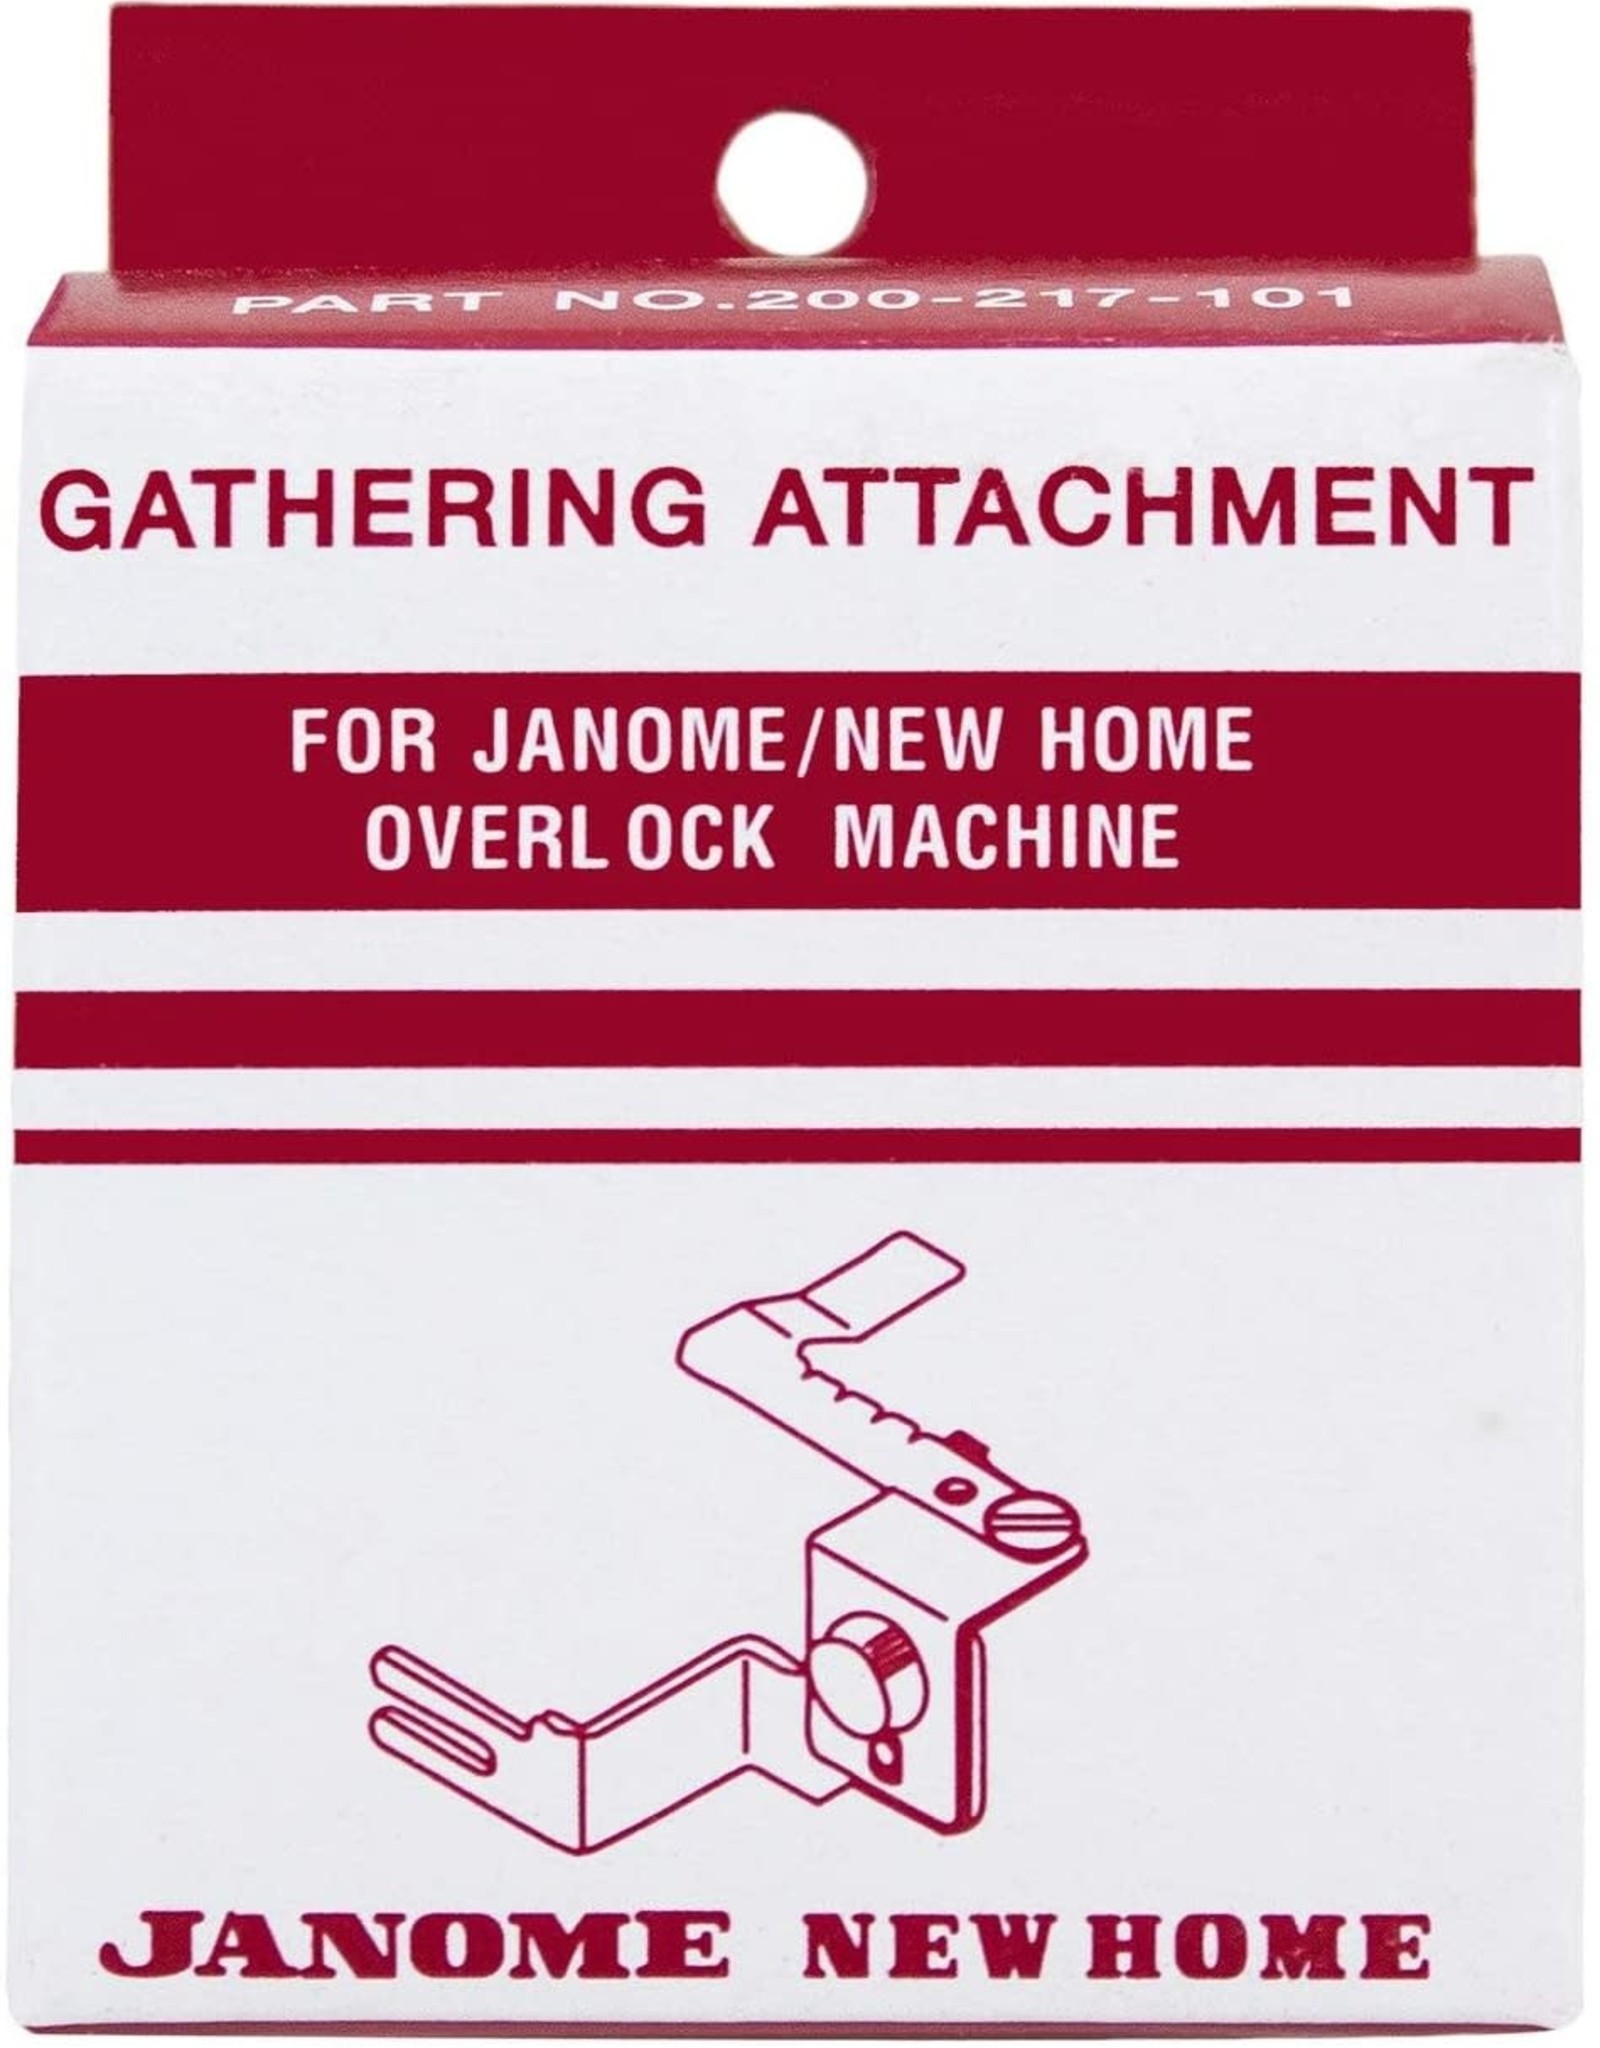 Janome Gathering attachment (new home)- 200217101